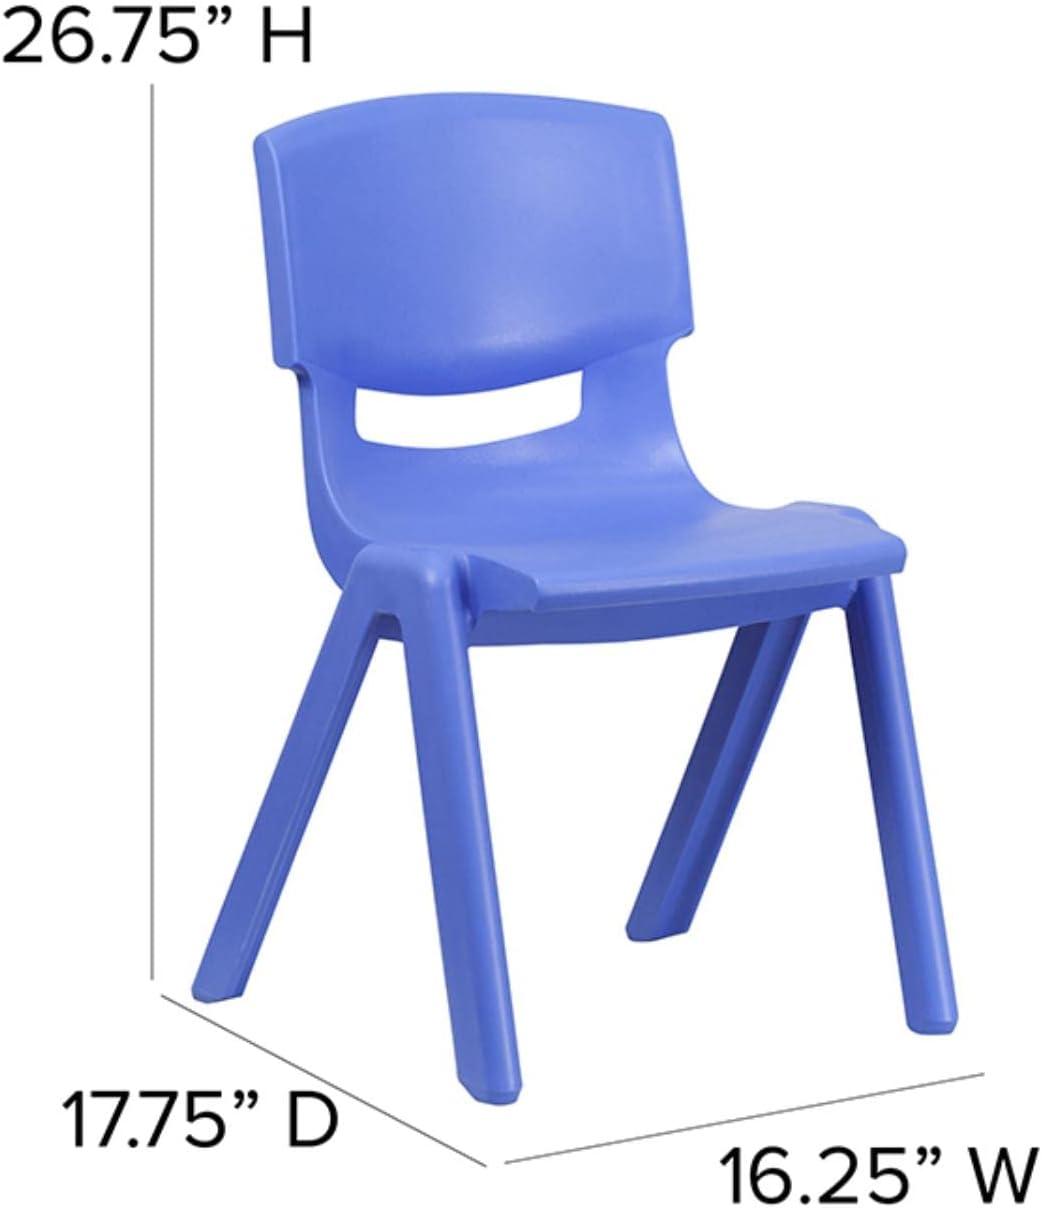 Bright Blue Lightweight Stackable School Chair for Kids